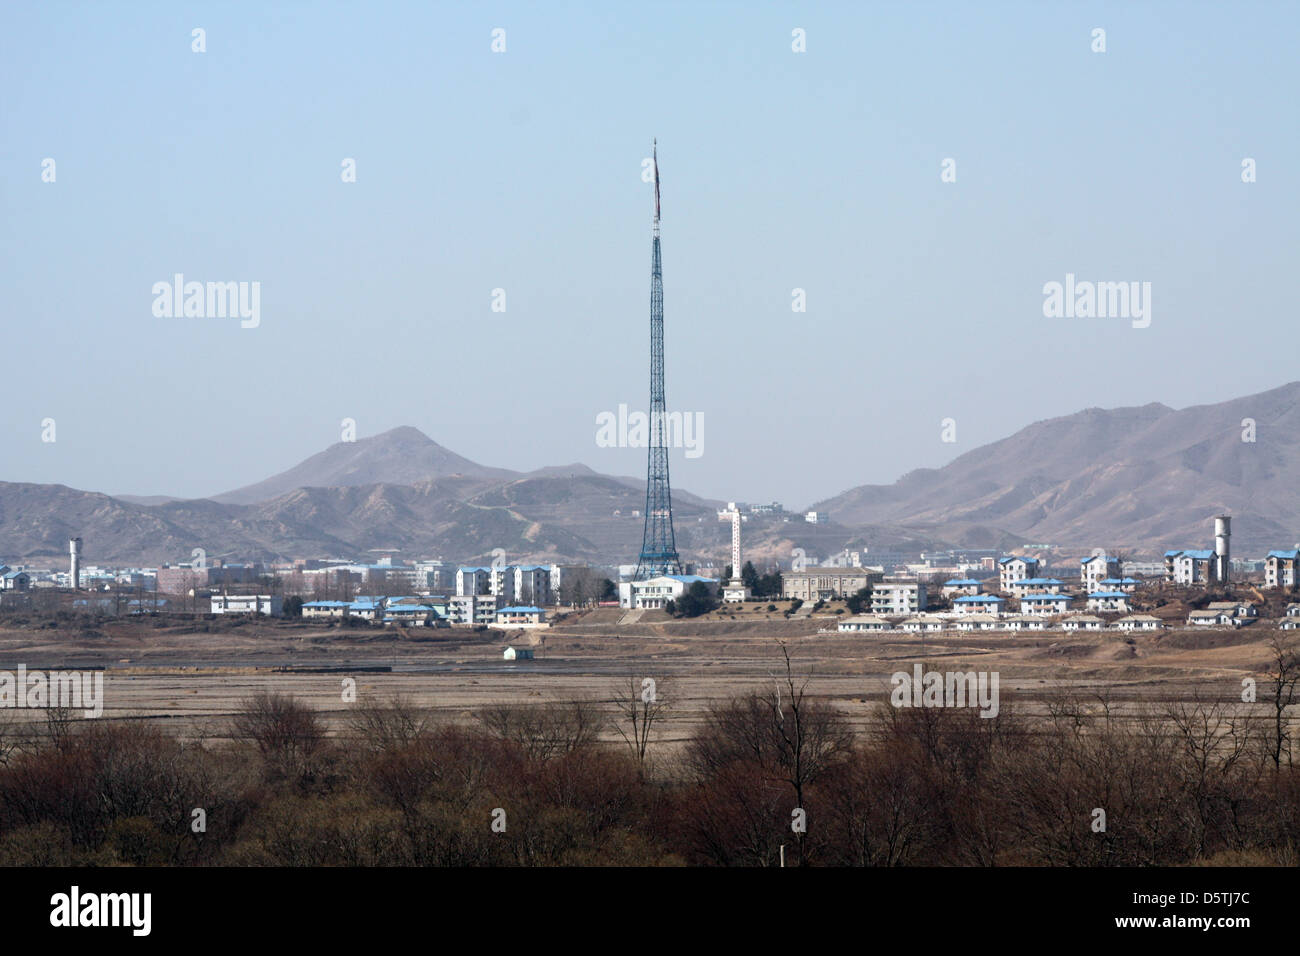 Nordkorea Panmunjeom Fahnenmast in Kijong-Dong Dorf fliegt der nordkoreanischen nationalen. Foto-Sharon-Maulwürfe Stockfoto